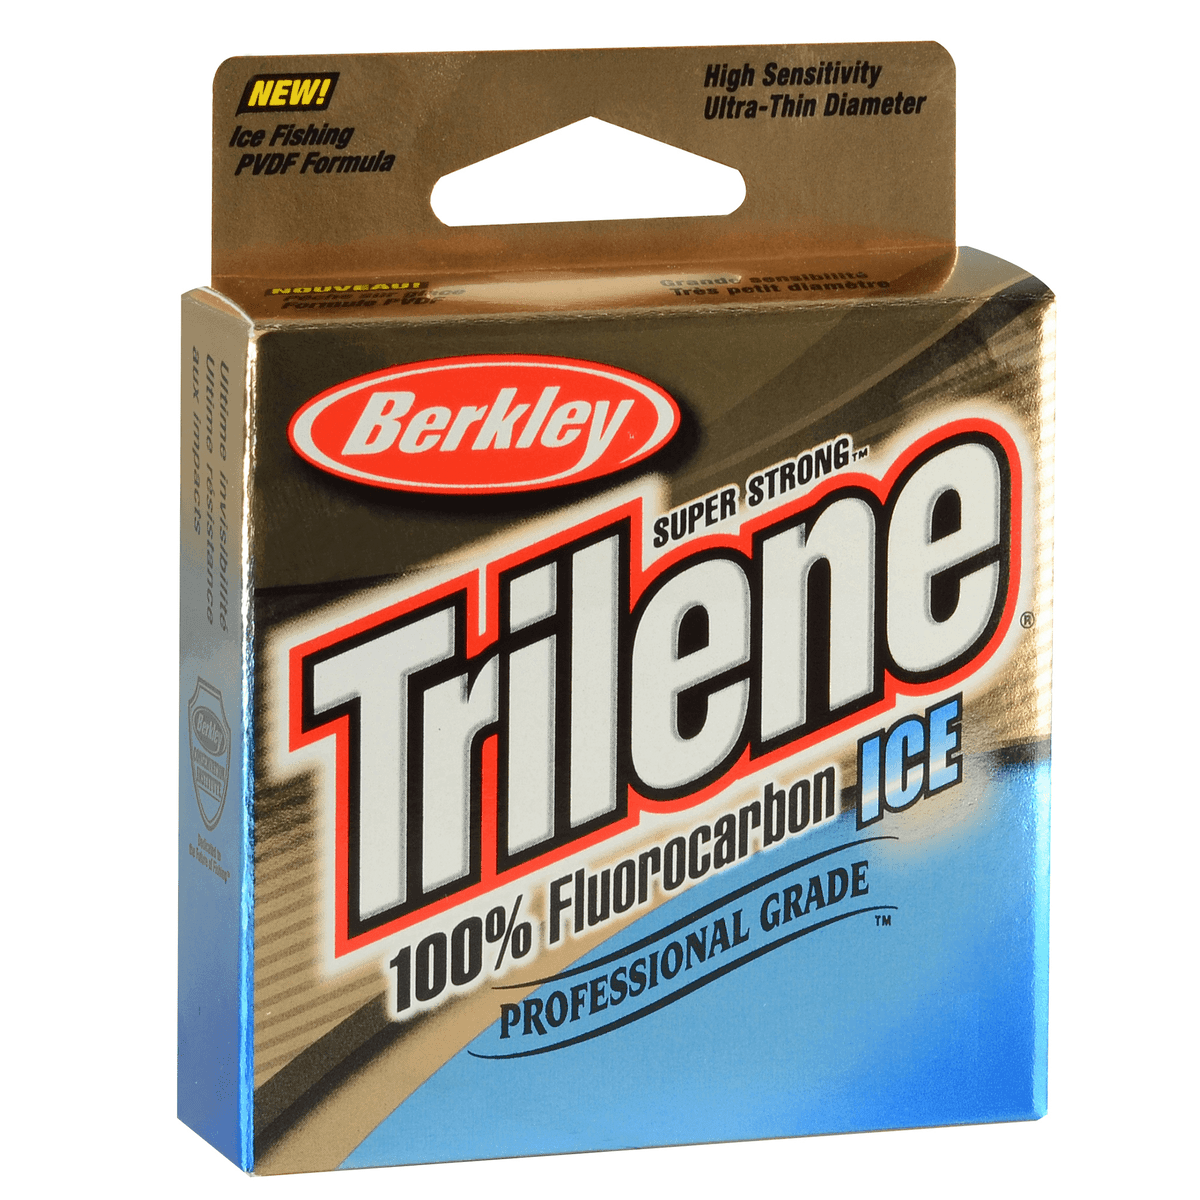 Berkley Trilene Professional Grade 100% Fluorocarbon Line, Clear, 4-Lb.